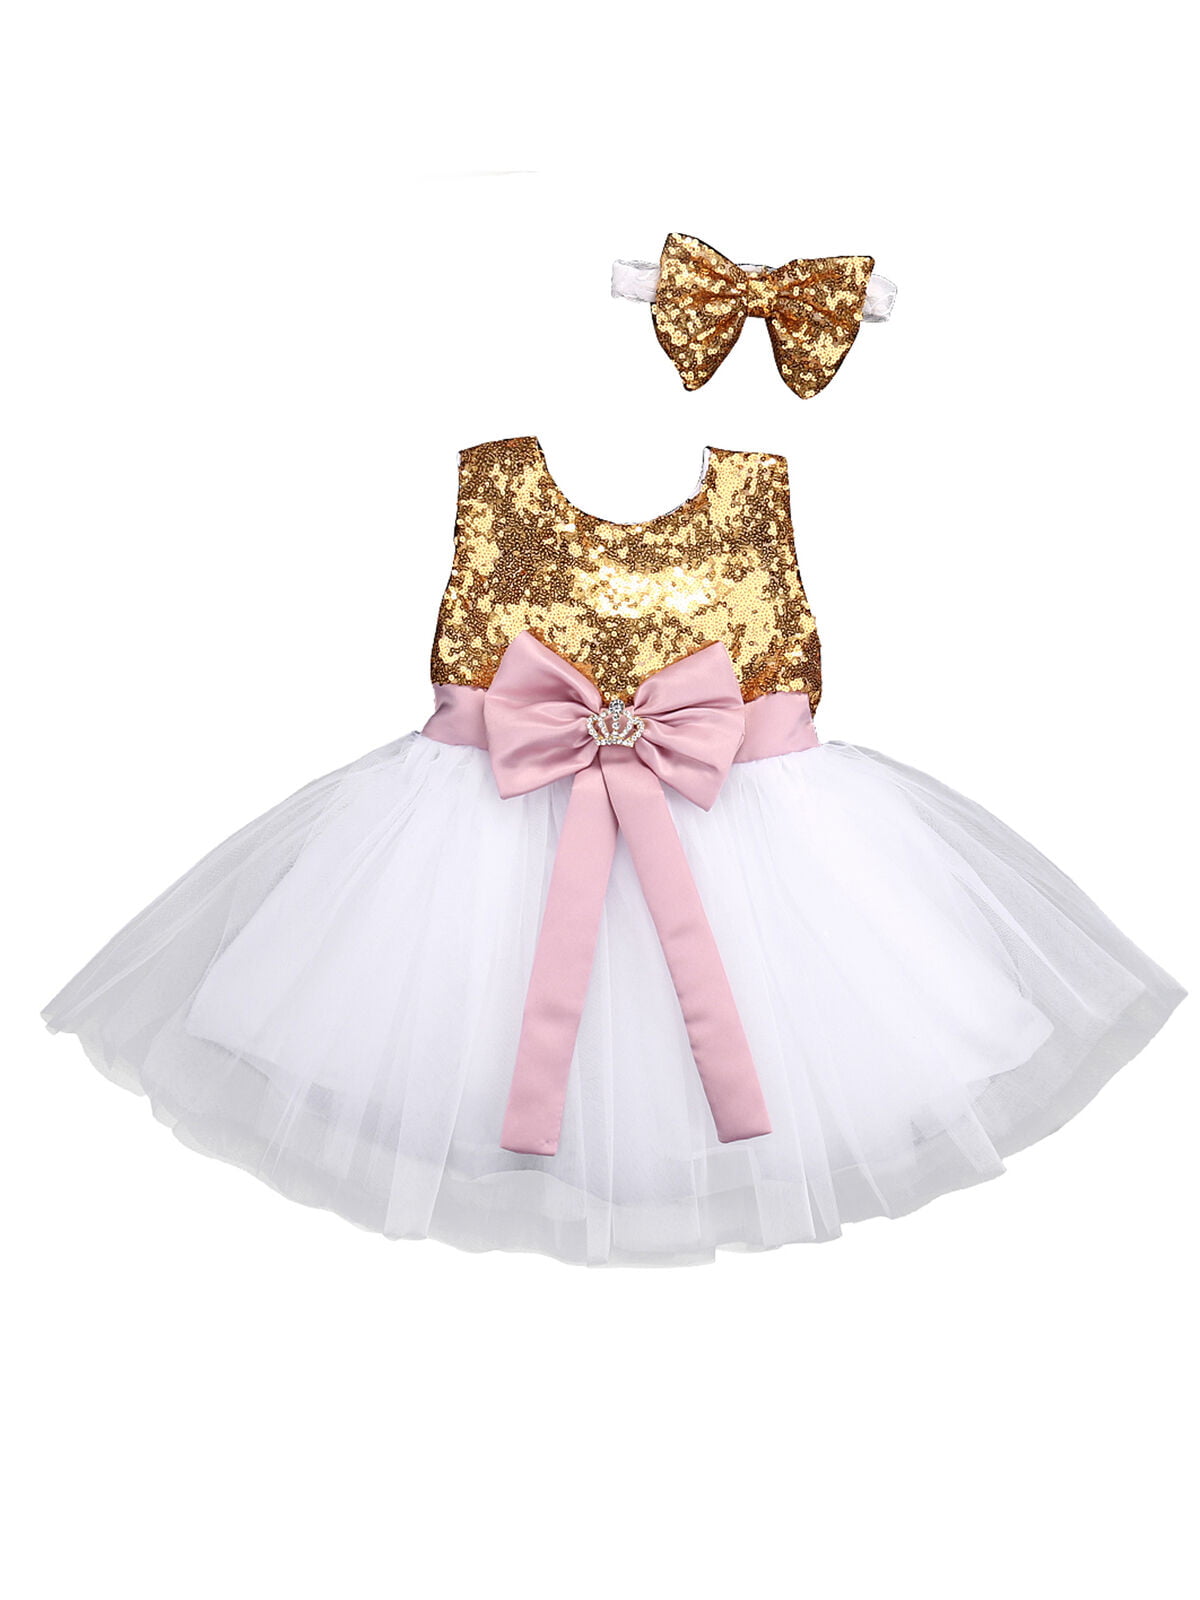 UK 1st/2nd Birthday Kids Baby Girl Romper Bow Tutu Lace Princess Party Dress sam 